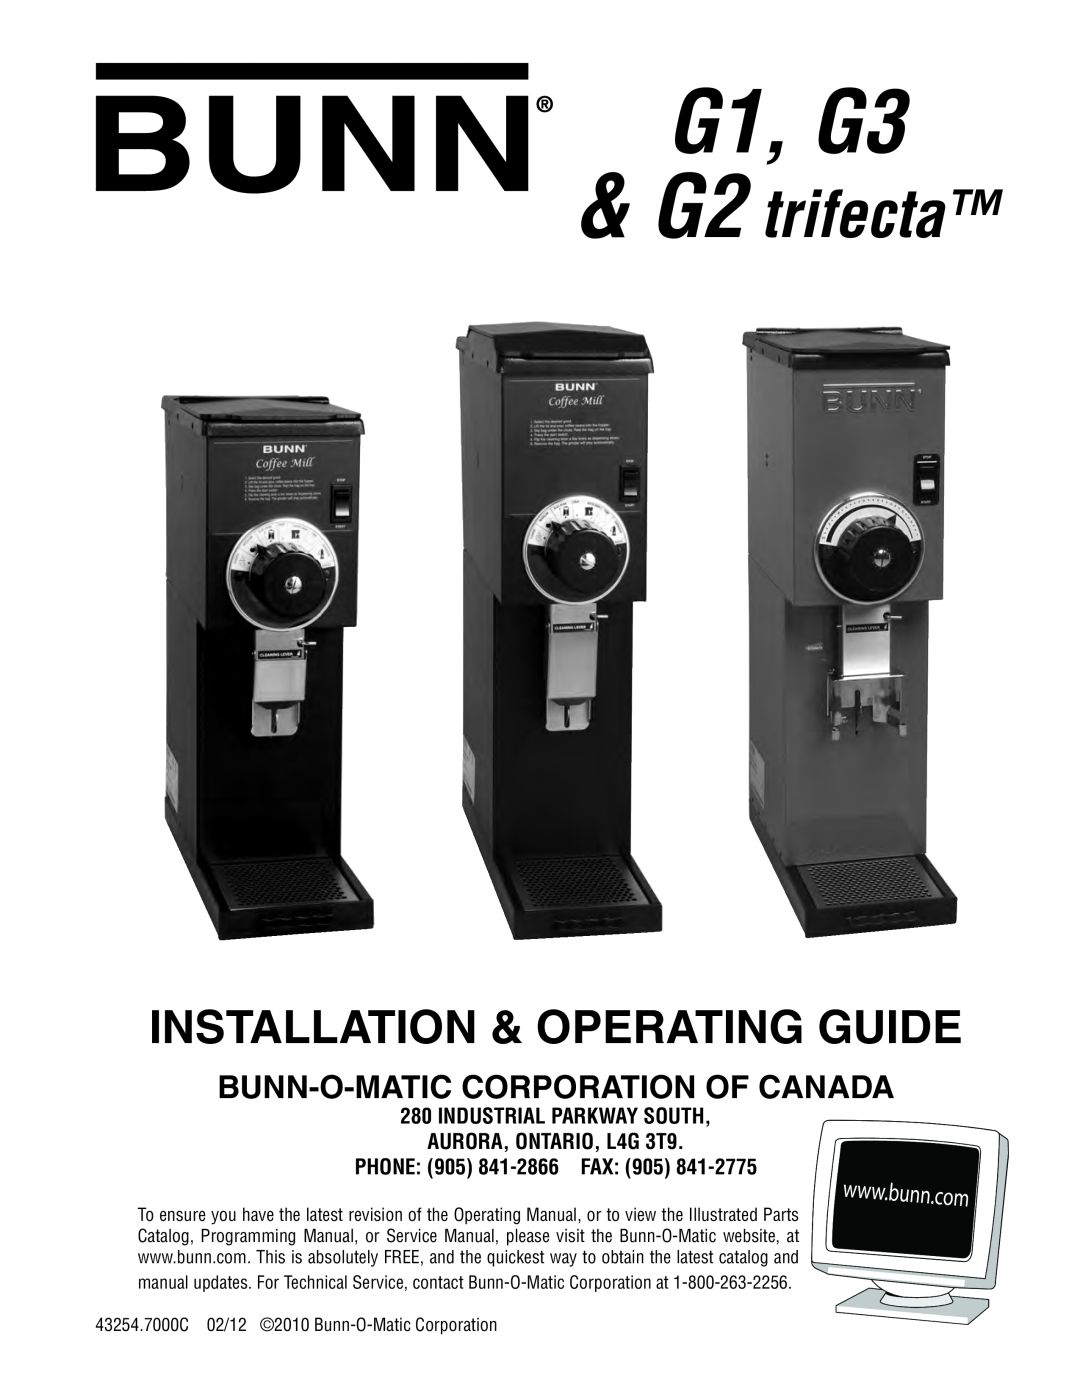 Bunn G2 TRIFECTA service manual G1,G2,G3, G2 trifecta, Installation & Operating Guide, Bunn-O-Maticcorporation 